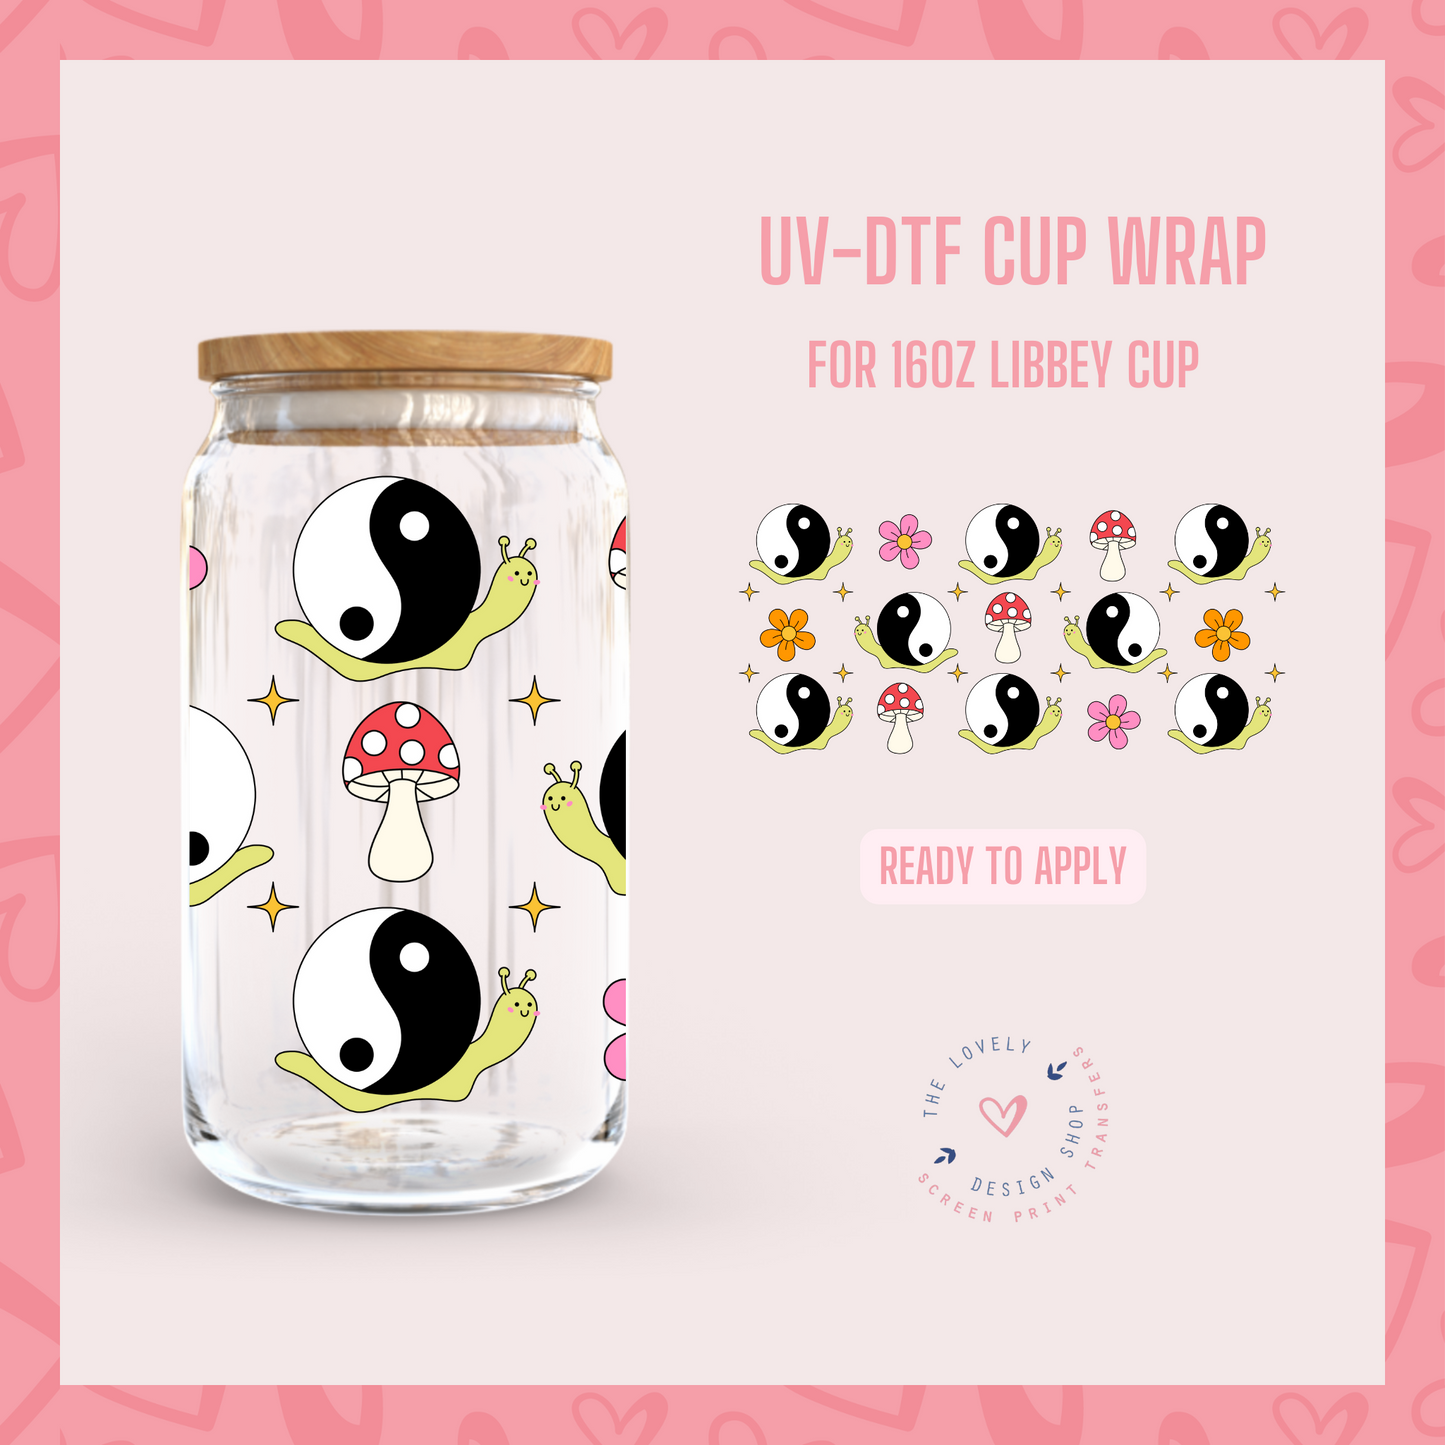 Groovy Snails - UV DTF 16 oz Libbey Cup Wrap (Ready to Ship) Feb 27